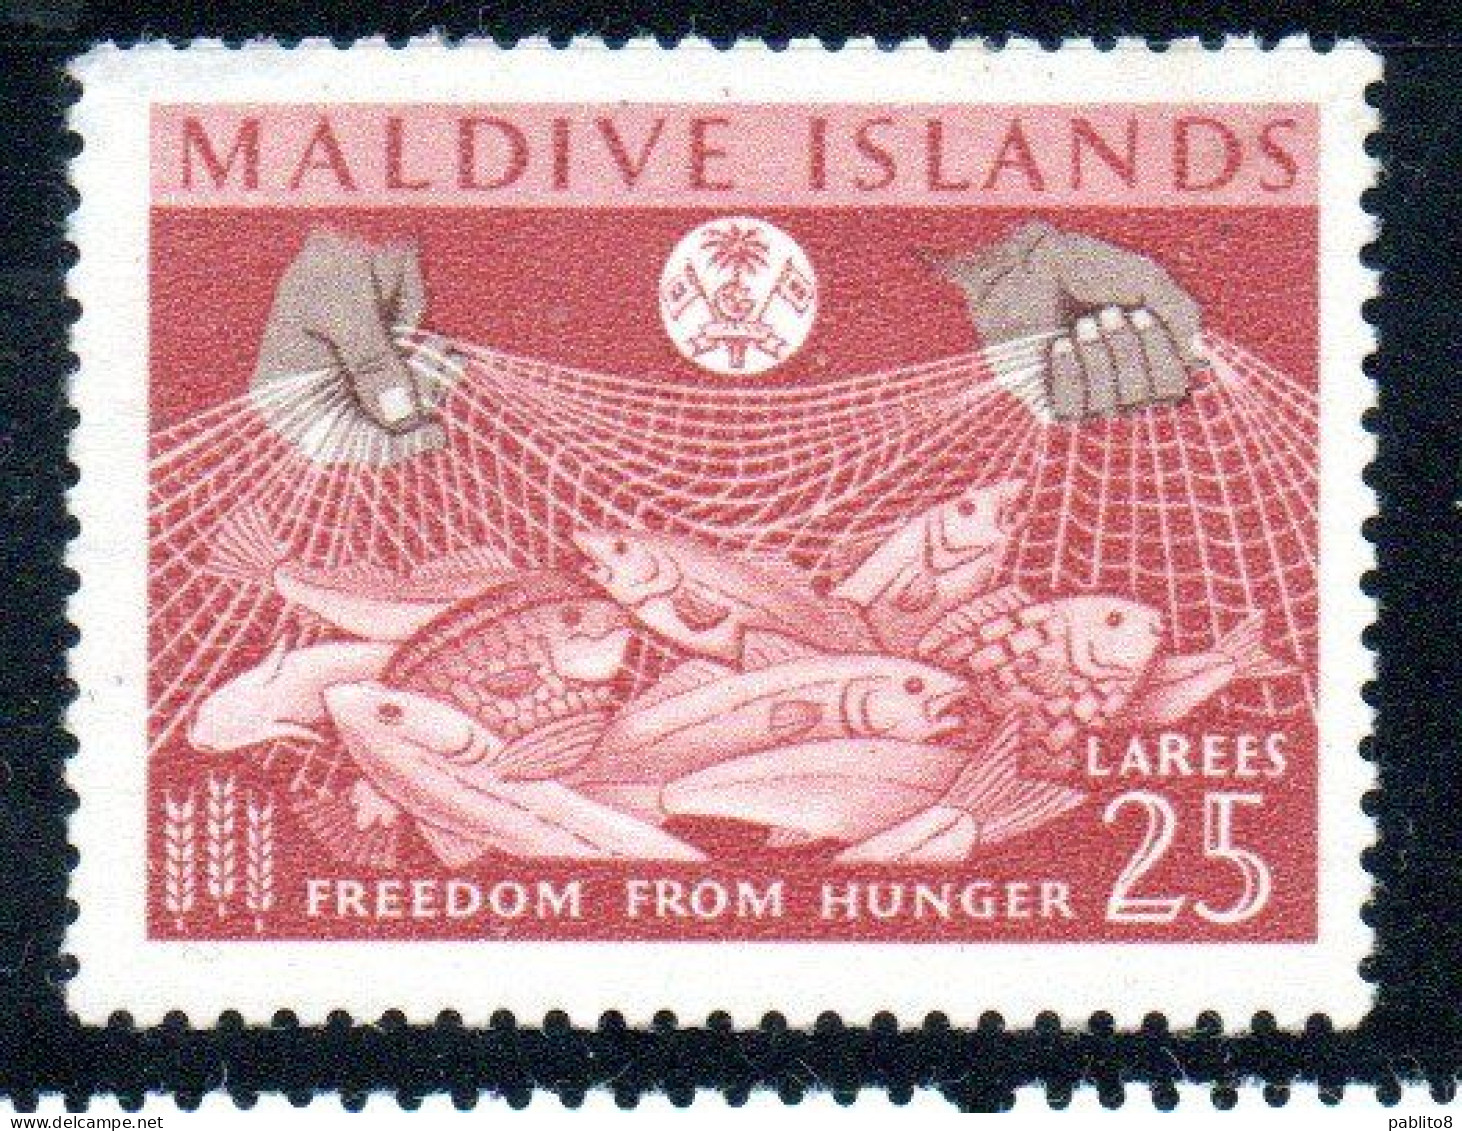 MALDIVES ISLANDS ISOLE MALDIVE BRITISH PROTECTORATED 1963 FAO FREEDOM FROM HUNGER 25L MLH - Maldive (...-1965)